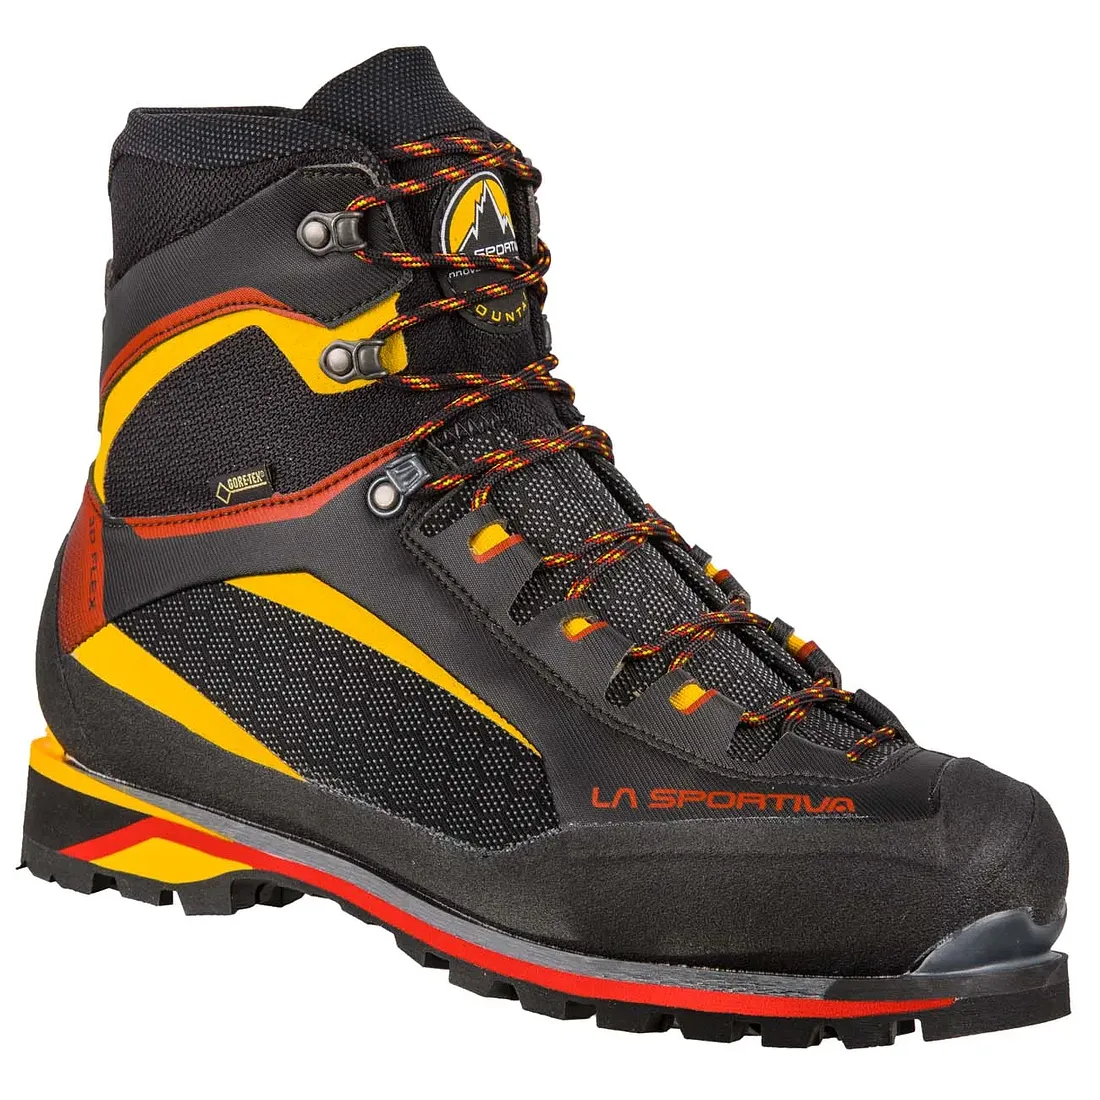 La Sportiva Trango Tower Extreme GTX Mountaineering Boots